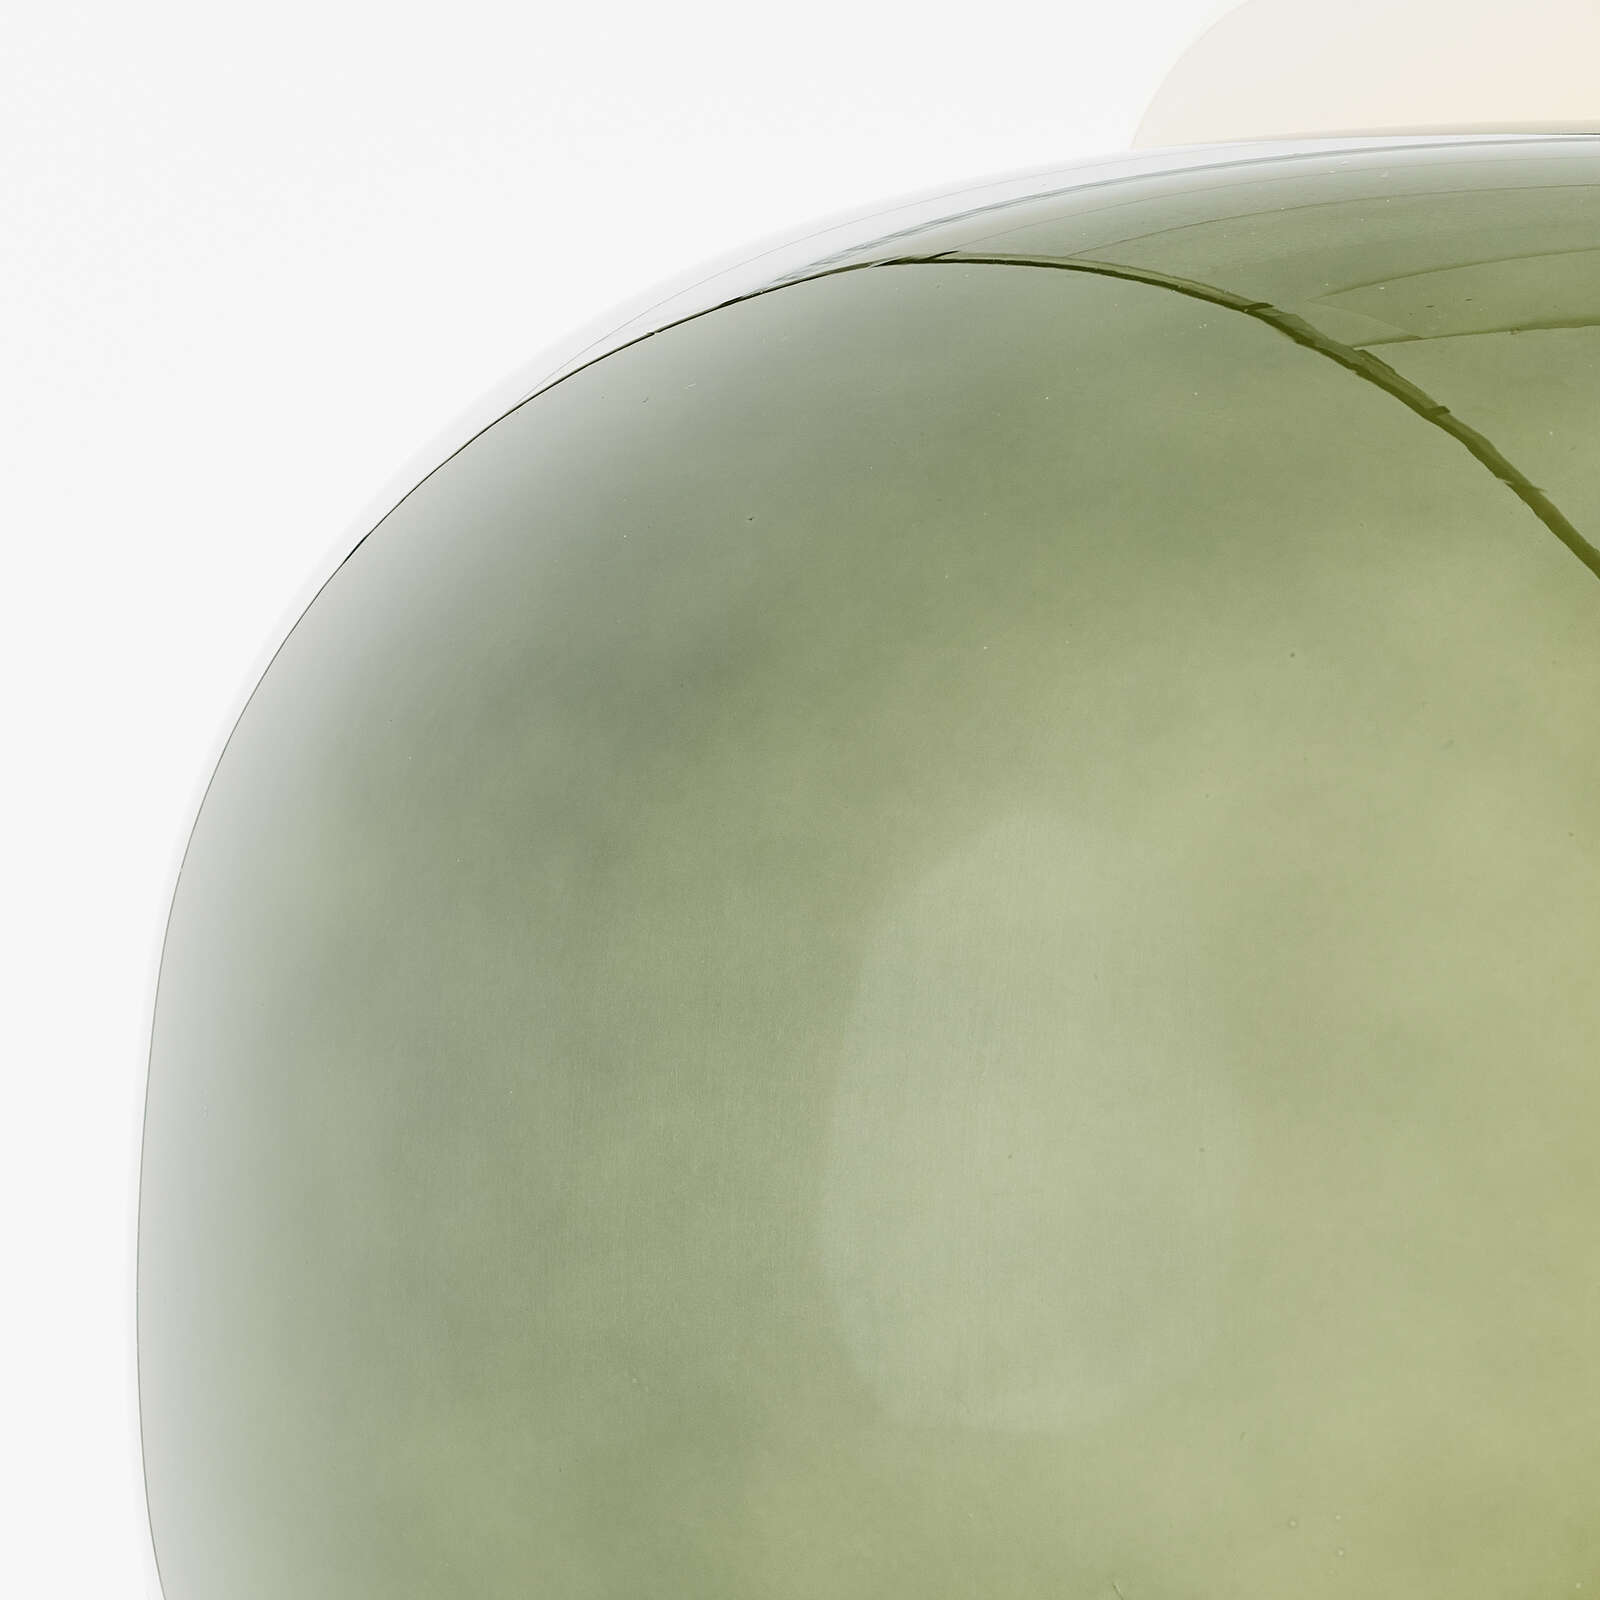             Glass pendant light - Carla 3 - Green
        